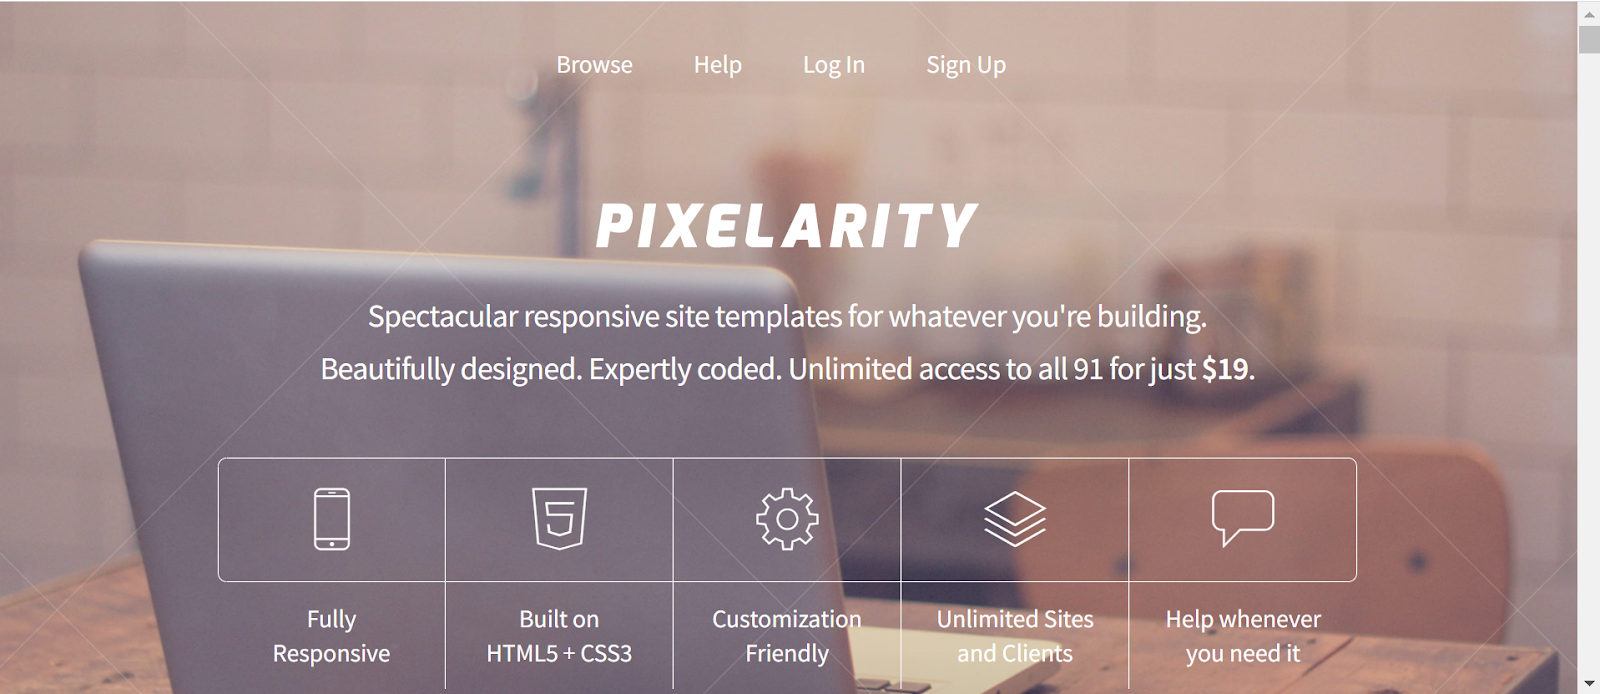 Bootstrap website templates, Pixelarity